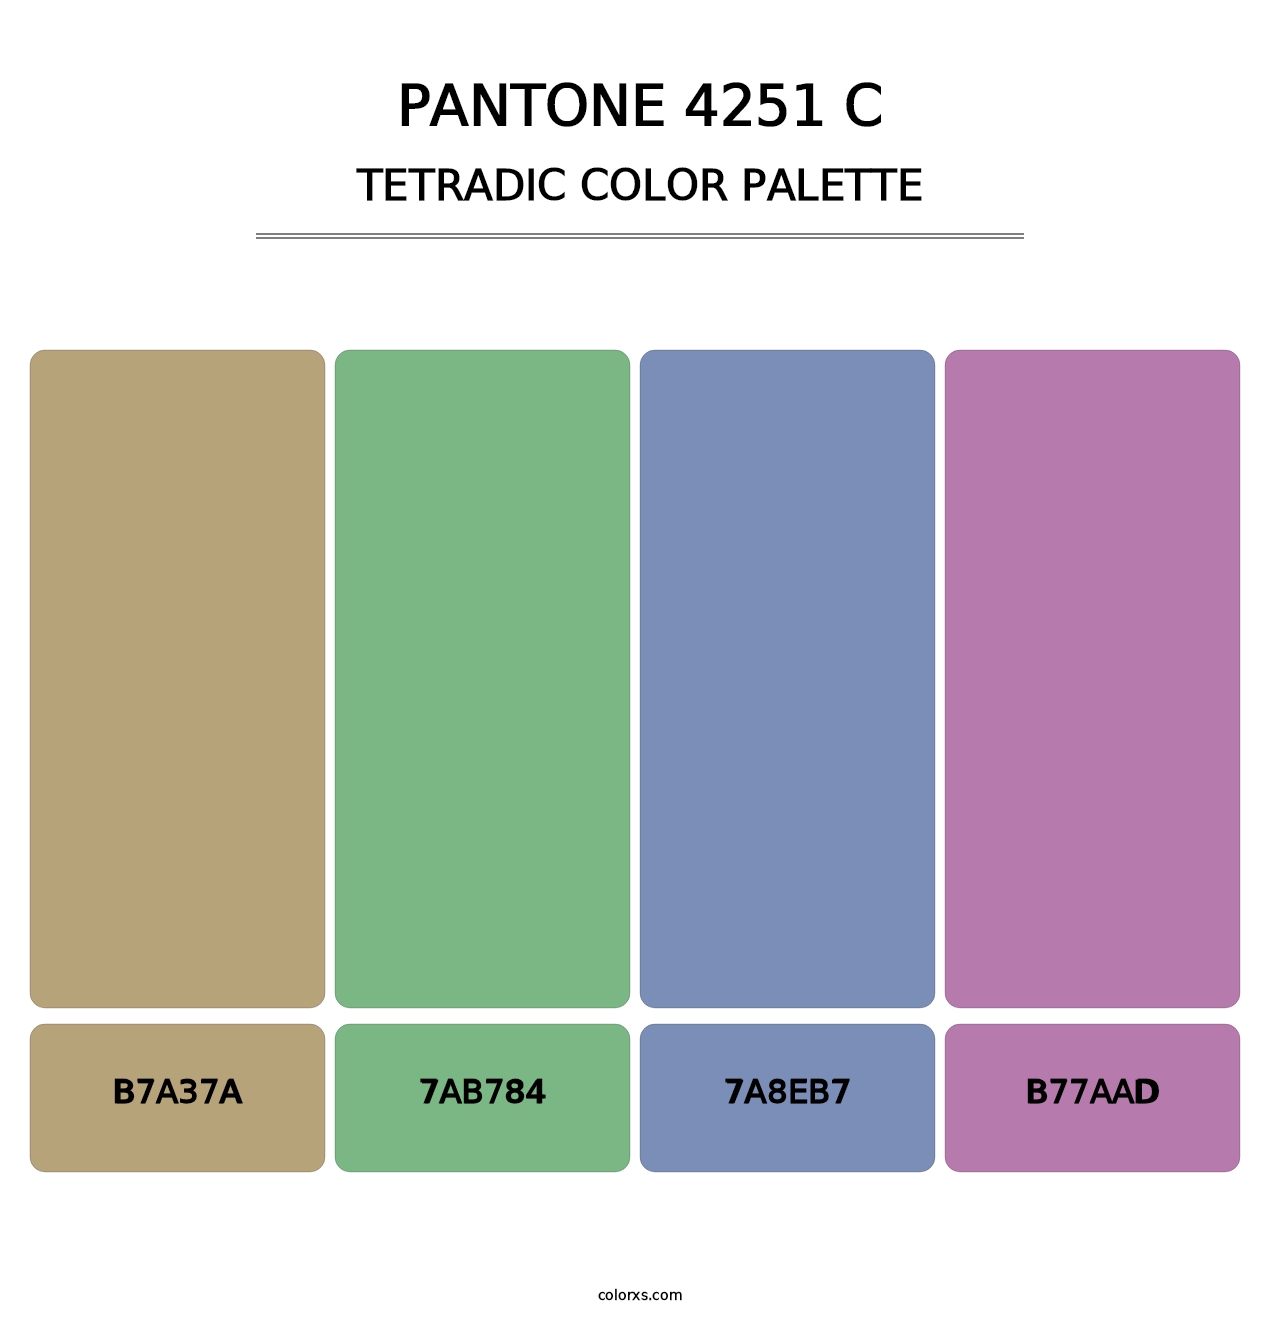 PANTONE 4251 C - Tetradic Color Palette